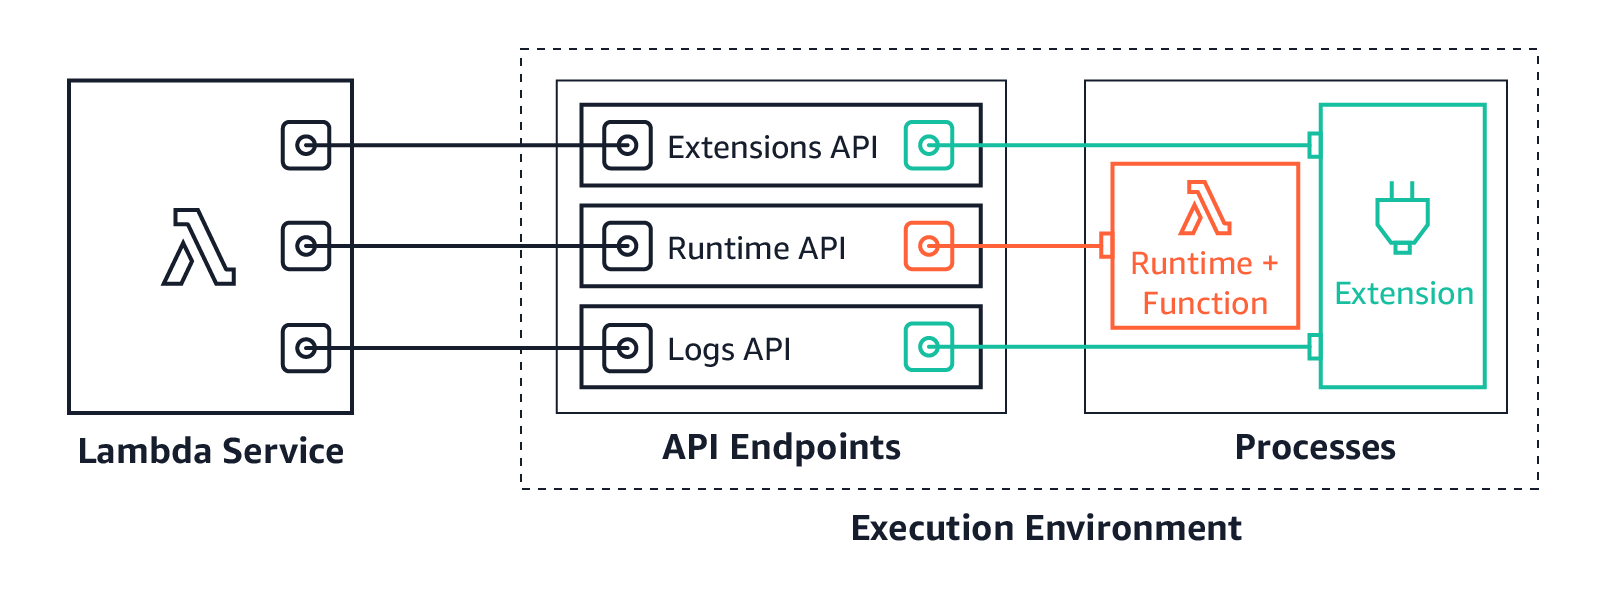 Lambda runtime API
architecture